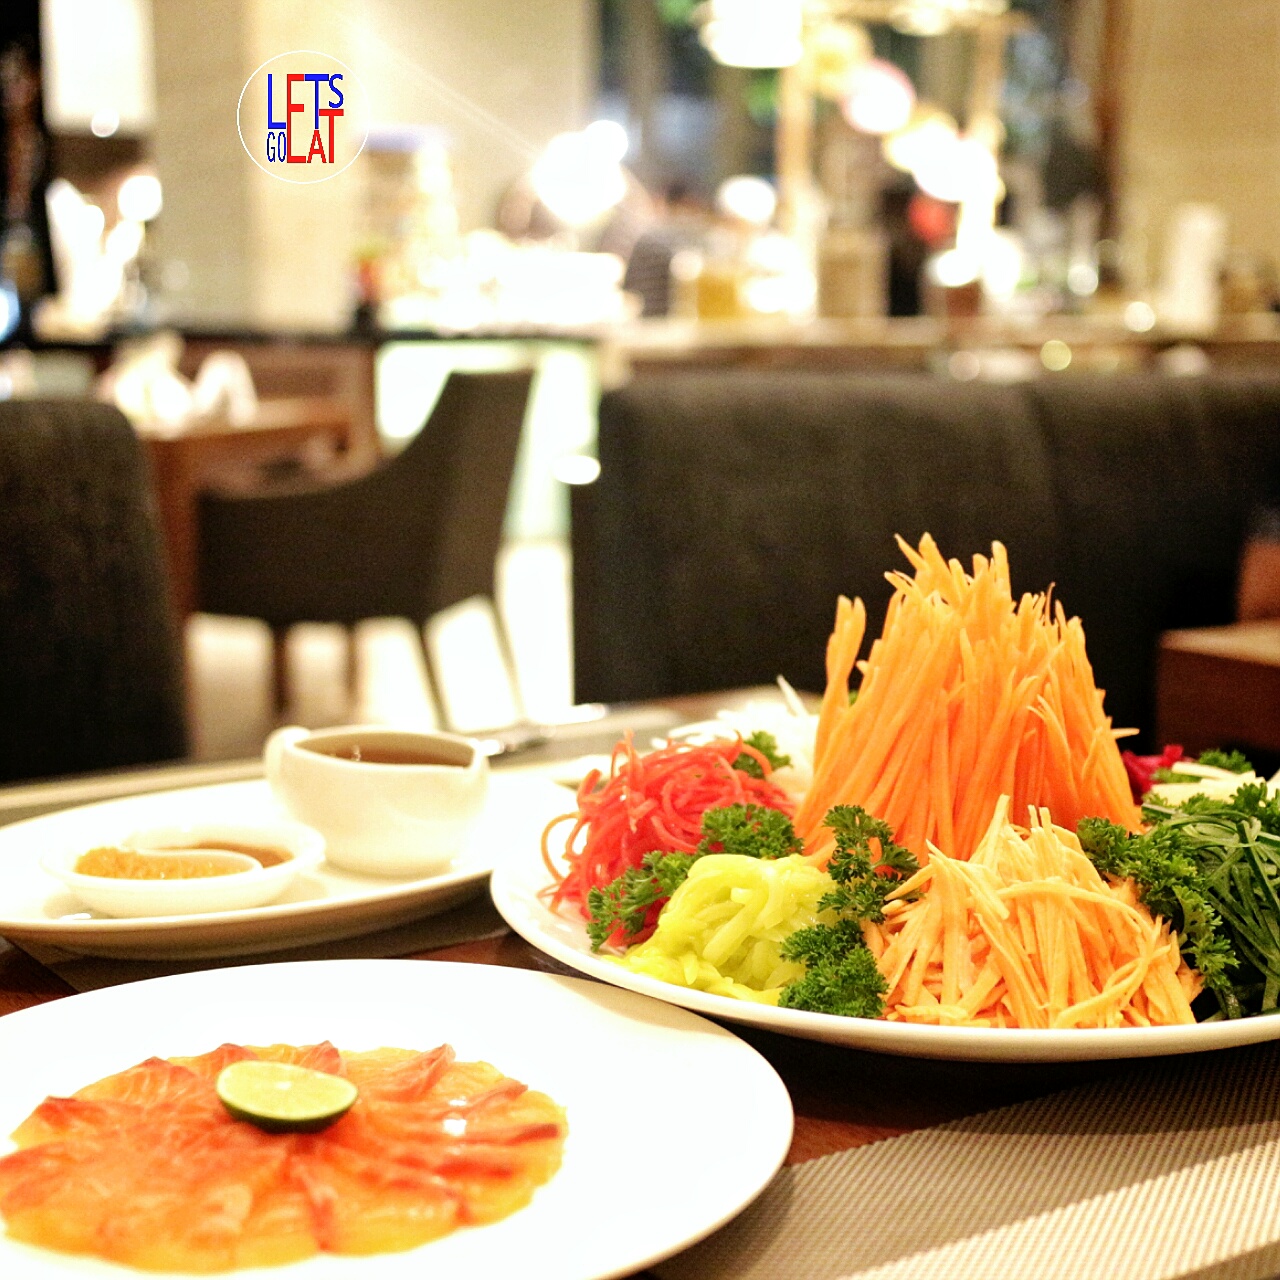 Lunar New Year At Hilton Hotel Bandung - Let's Go Eat